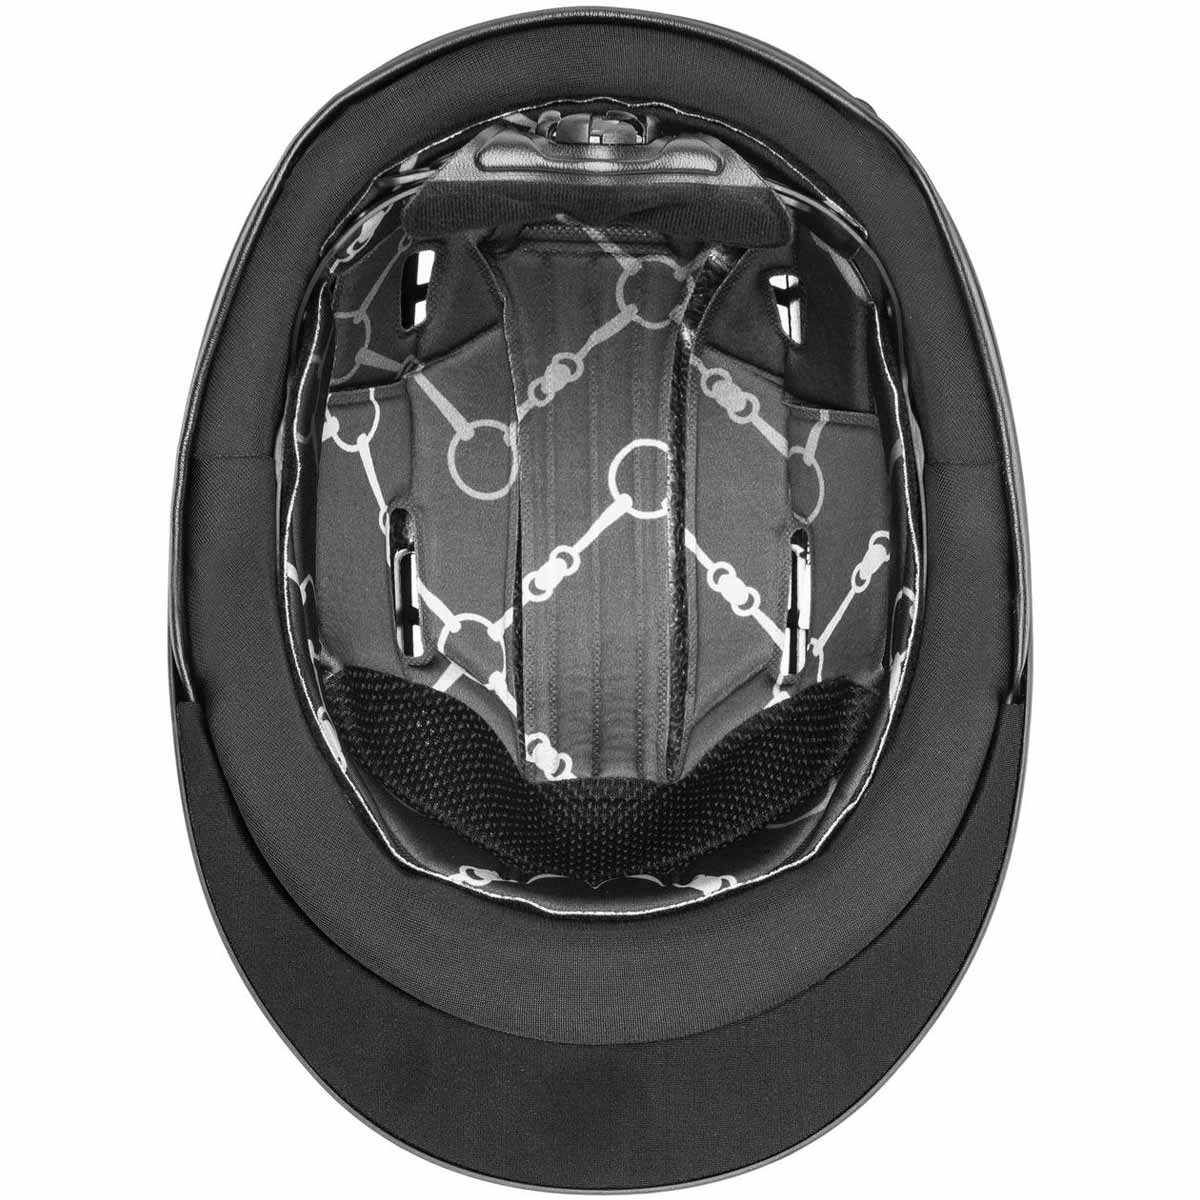 uvex suxxeed chrome riding helmet black mat - silver M/L